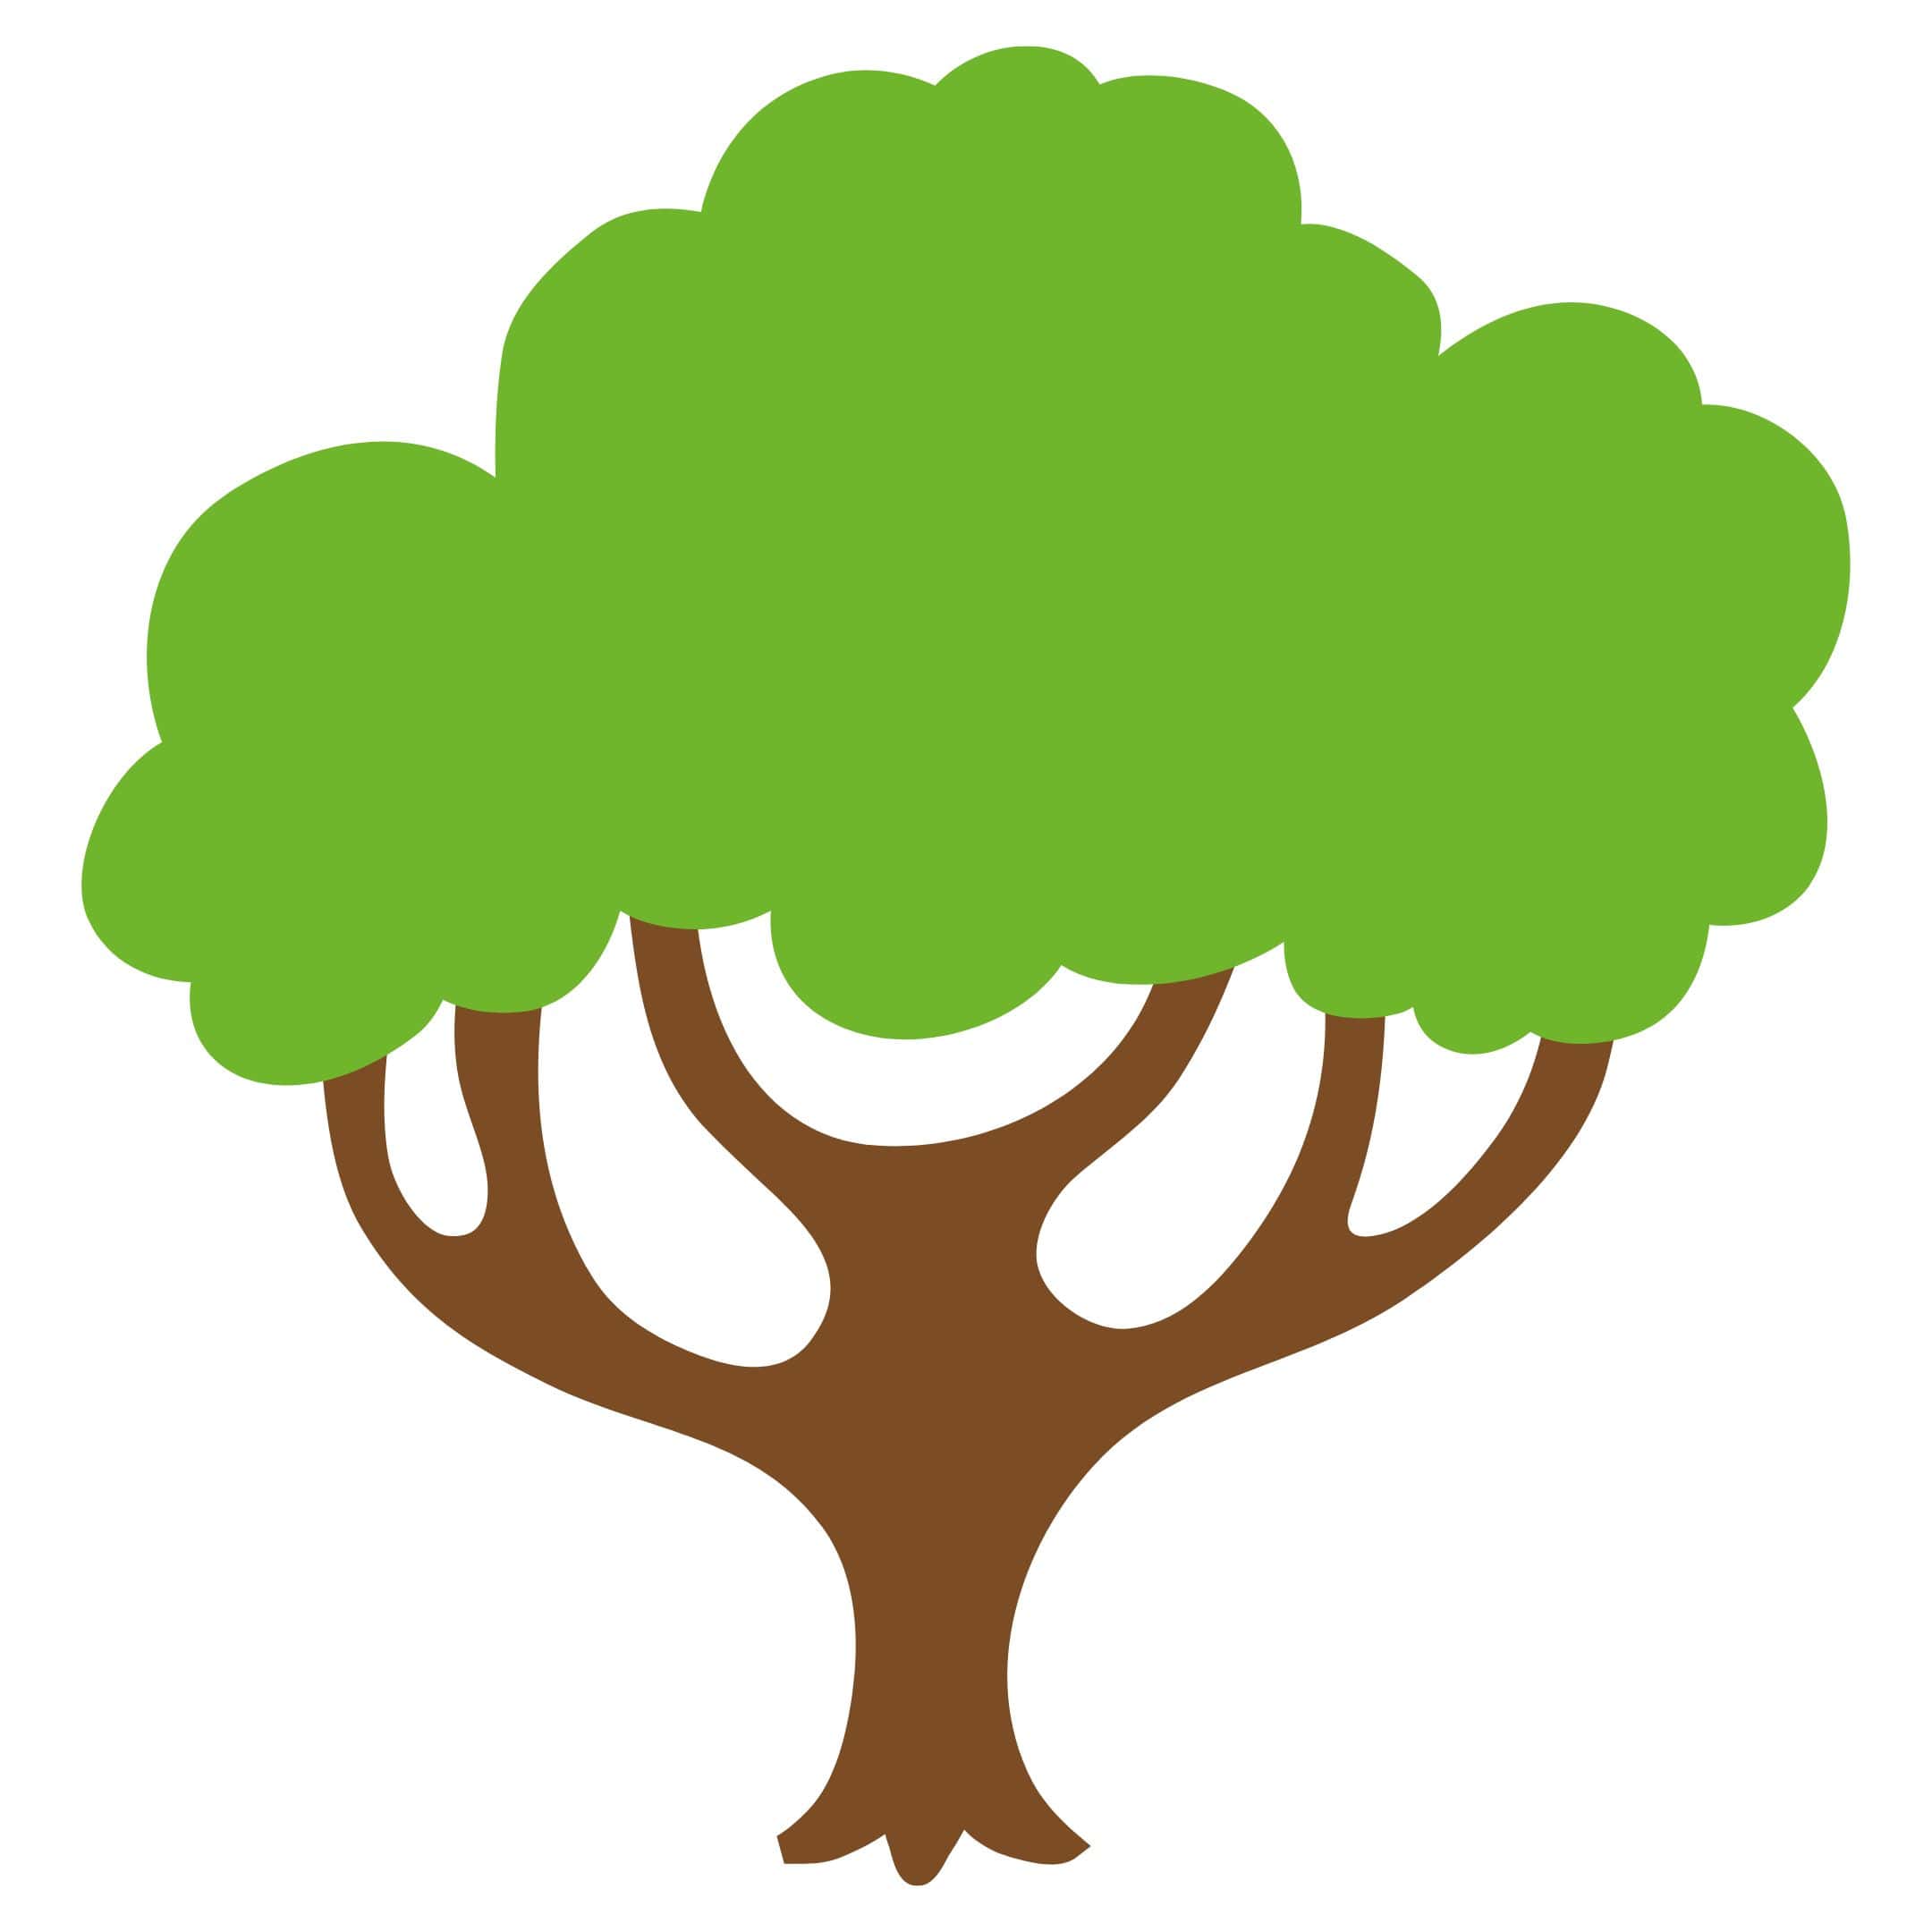 Image of green tree